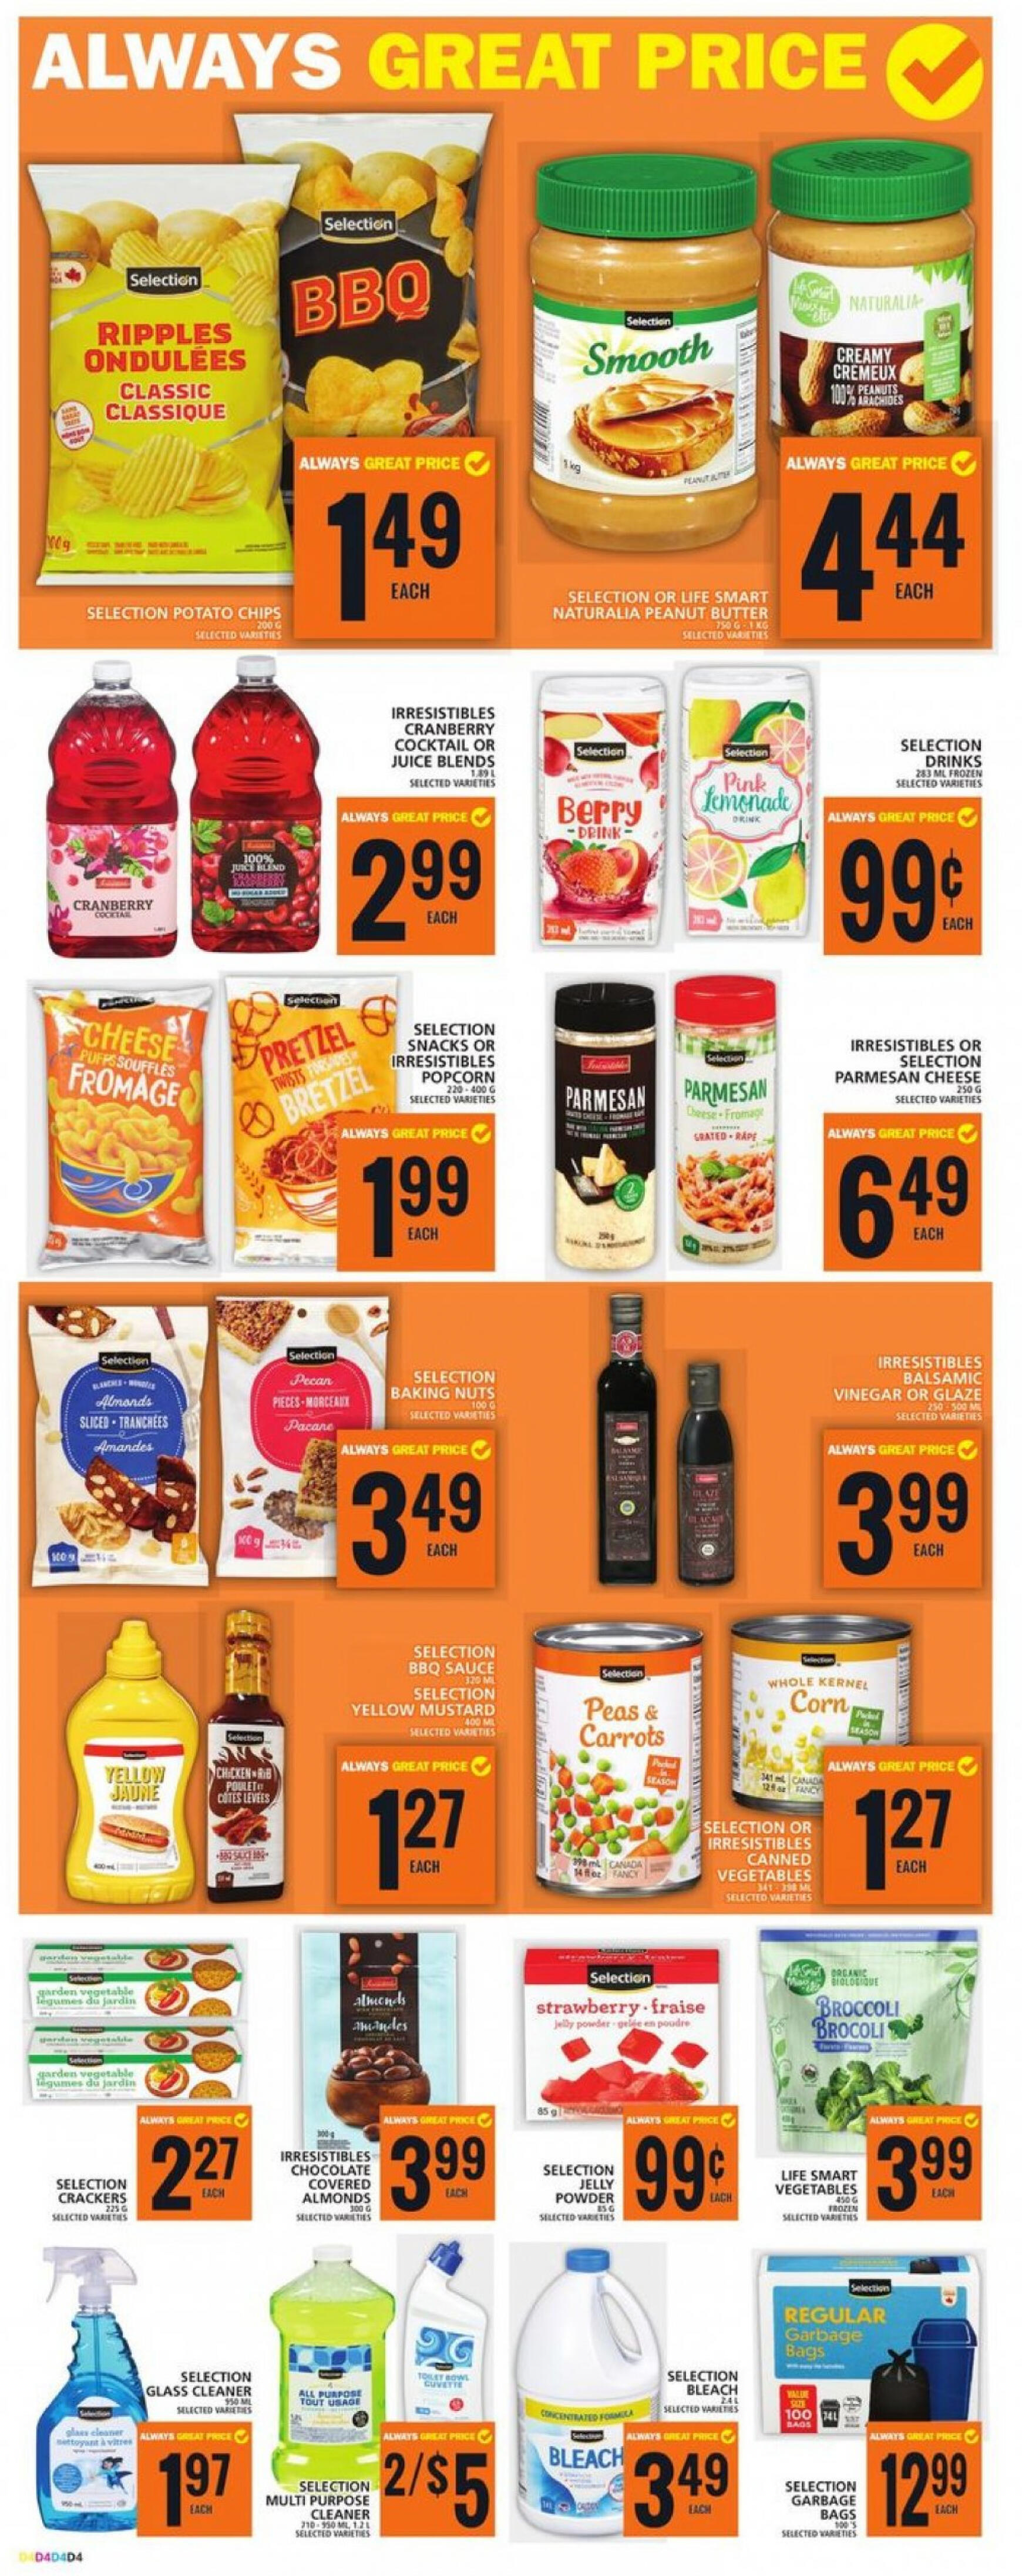 food-basics - Food Basics flyer current 23.05. - 29.05. - page: 9